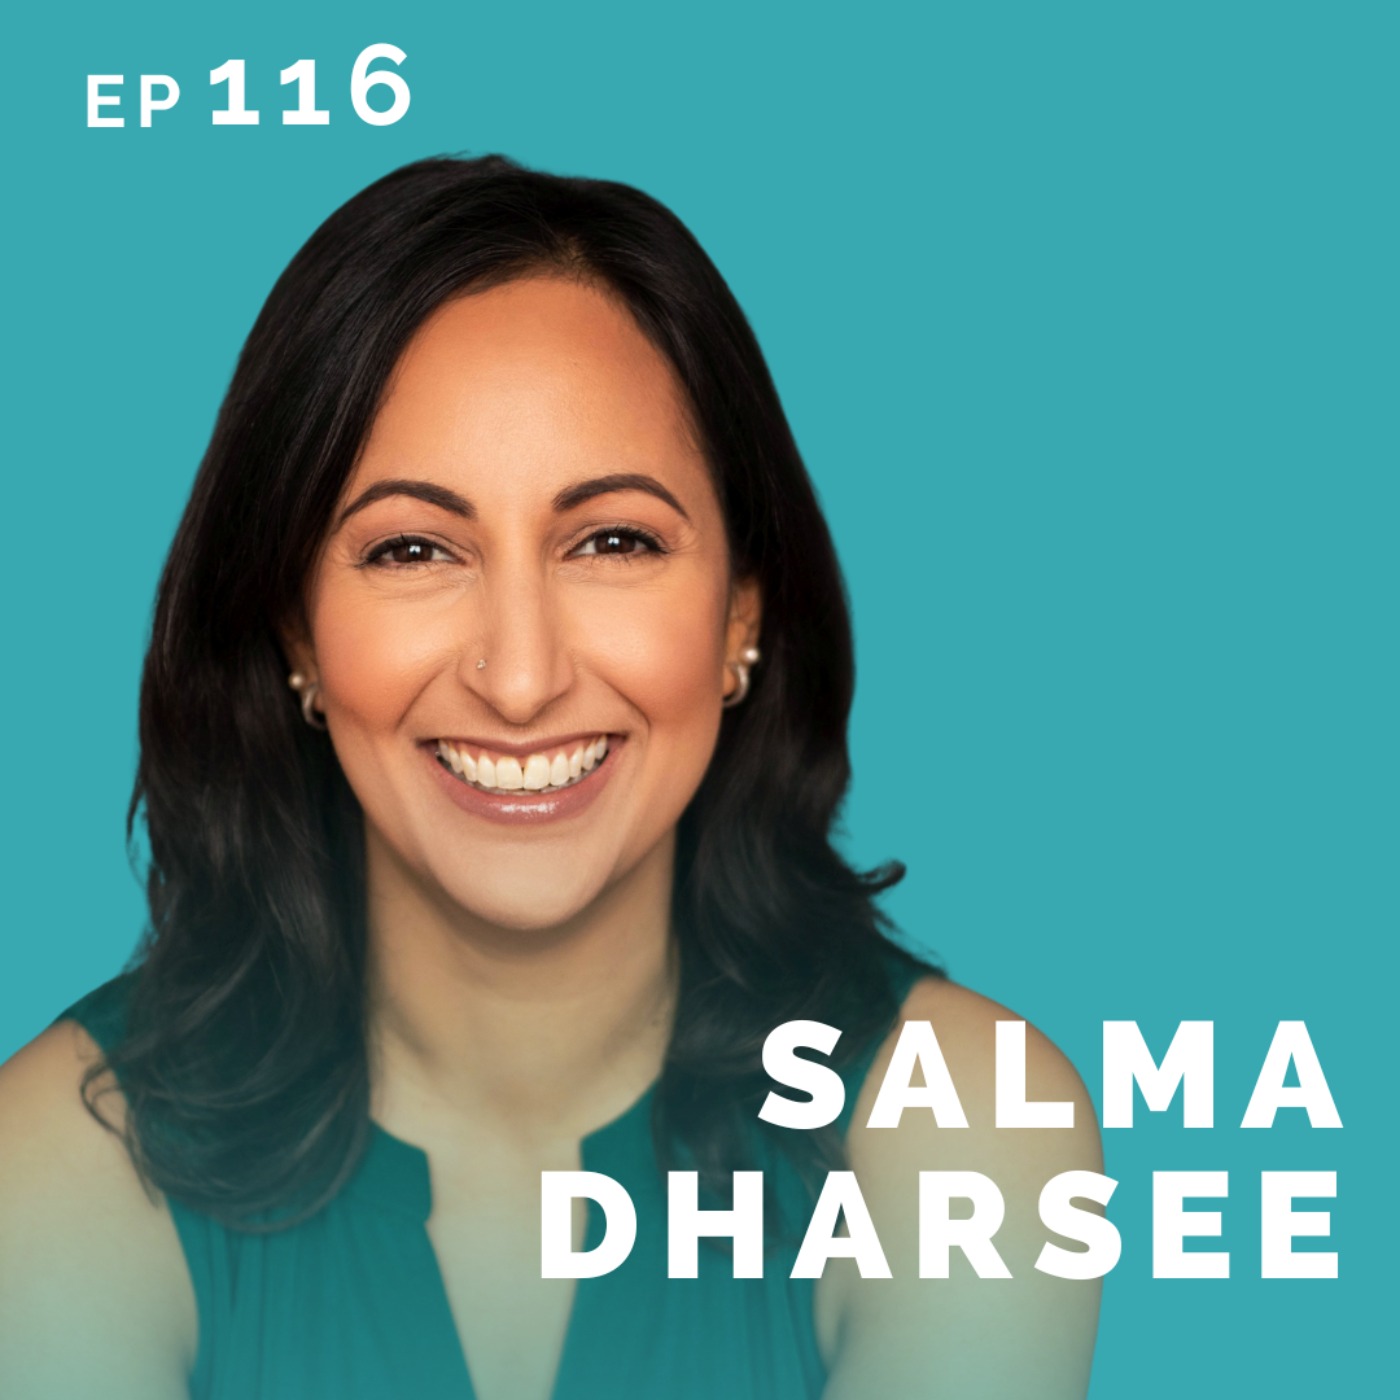 EP 116: Salma Dharsee: Engineer Turned Actor